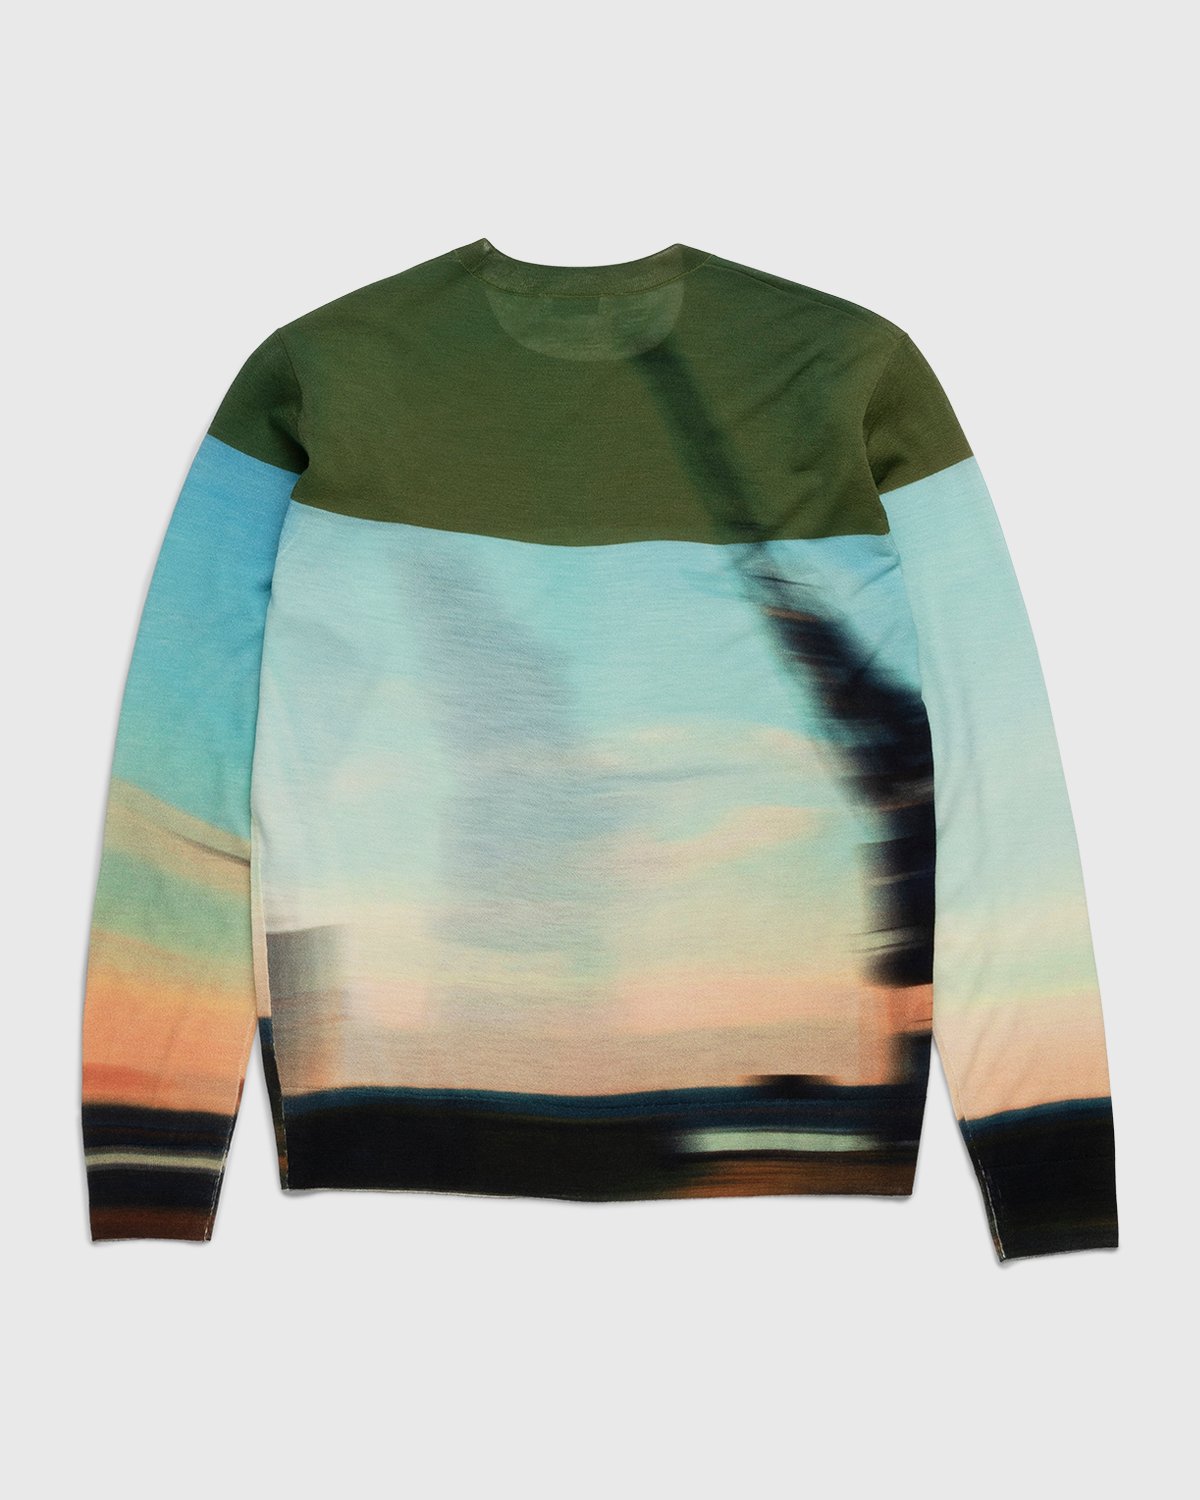 Dries van Noten - Jendrik Merino Sweater Dessin - Clothing - Multi - Image 2